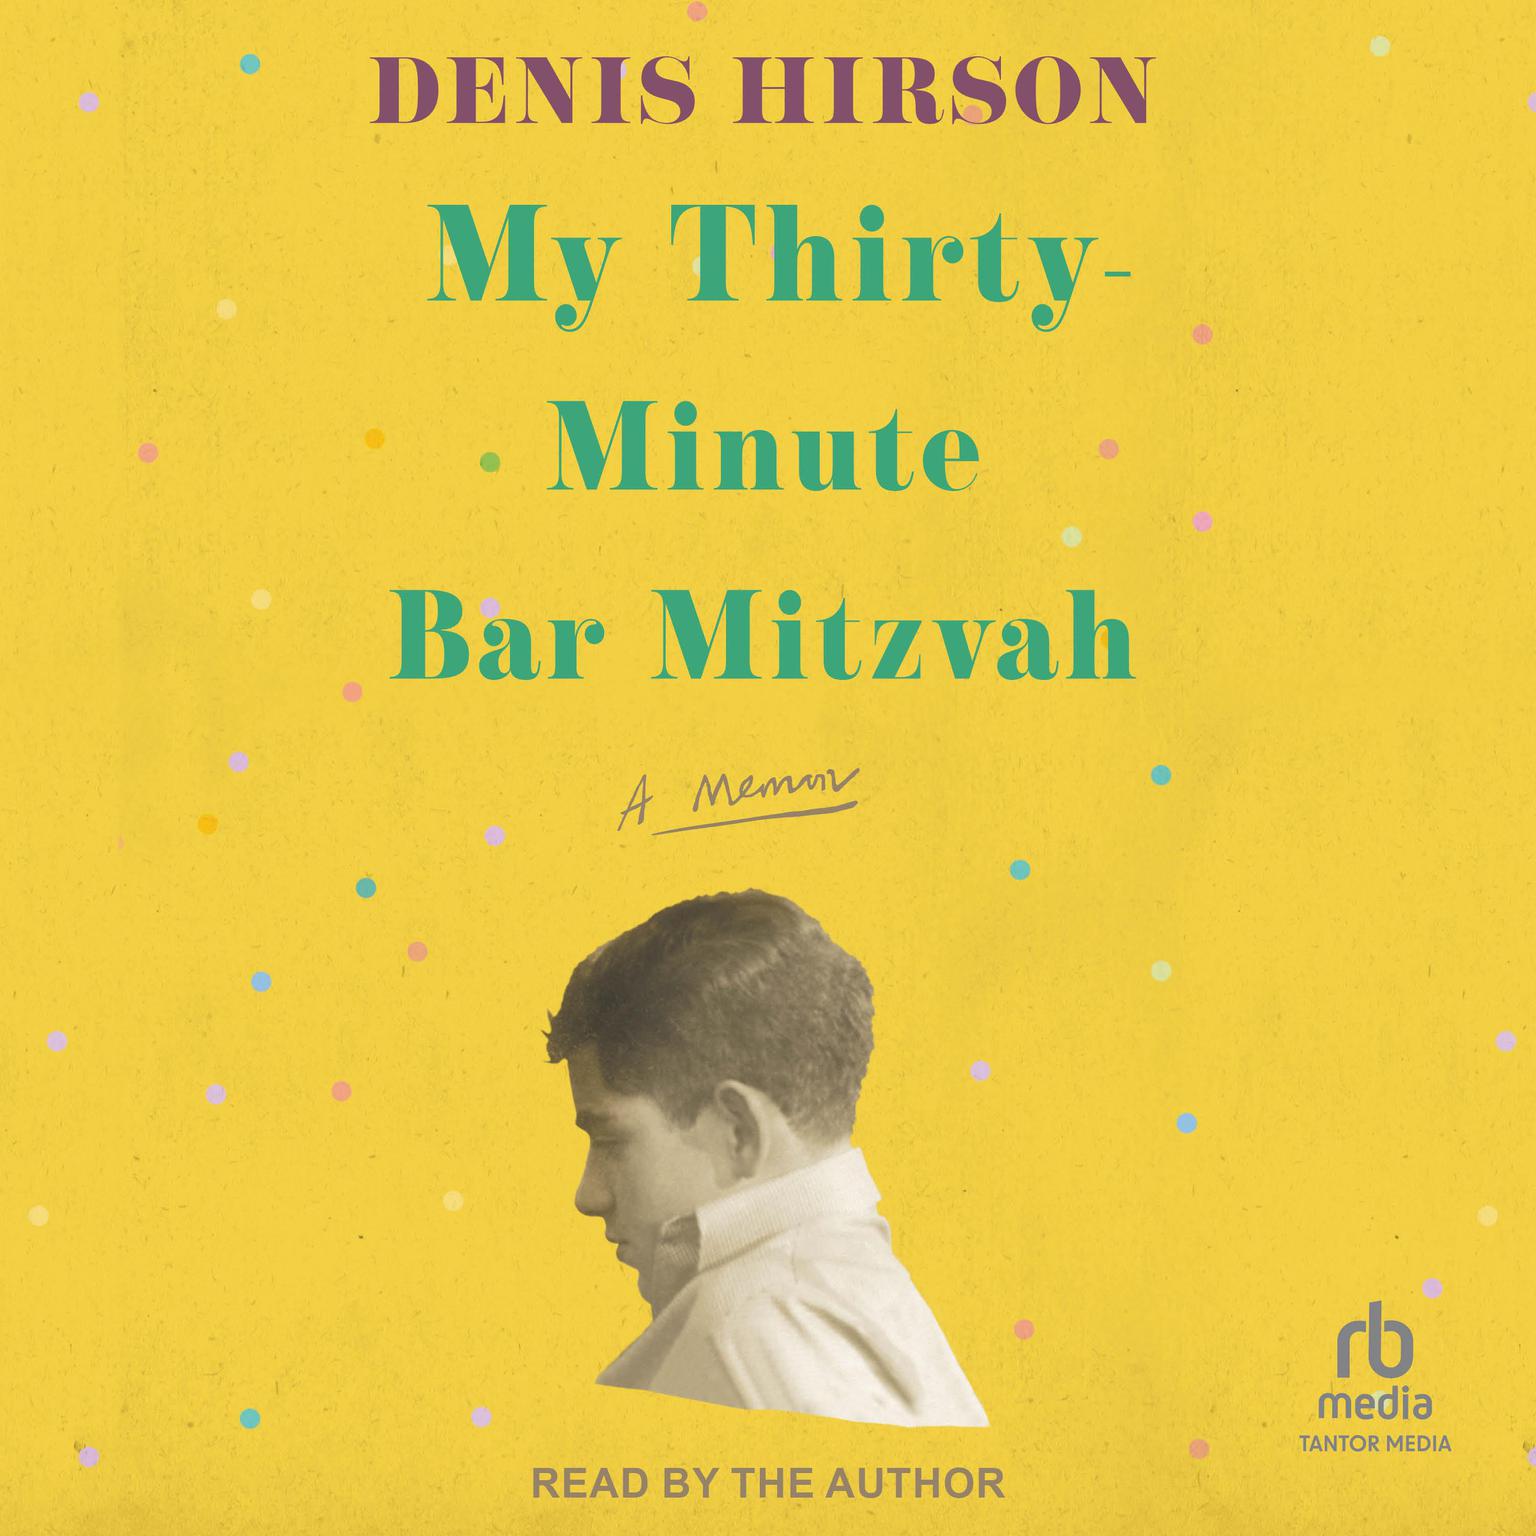 My Thirty-Minute Bar Mitzvah: A Memoir Audiobook, by Denis Hirson